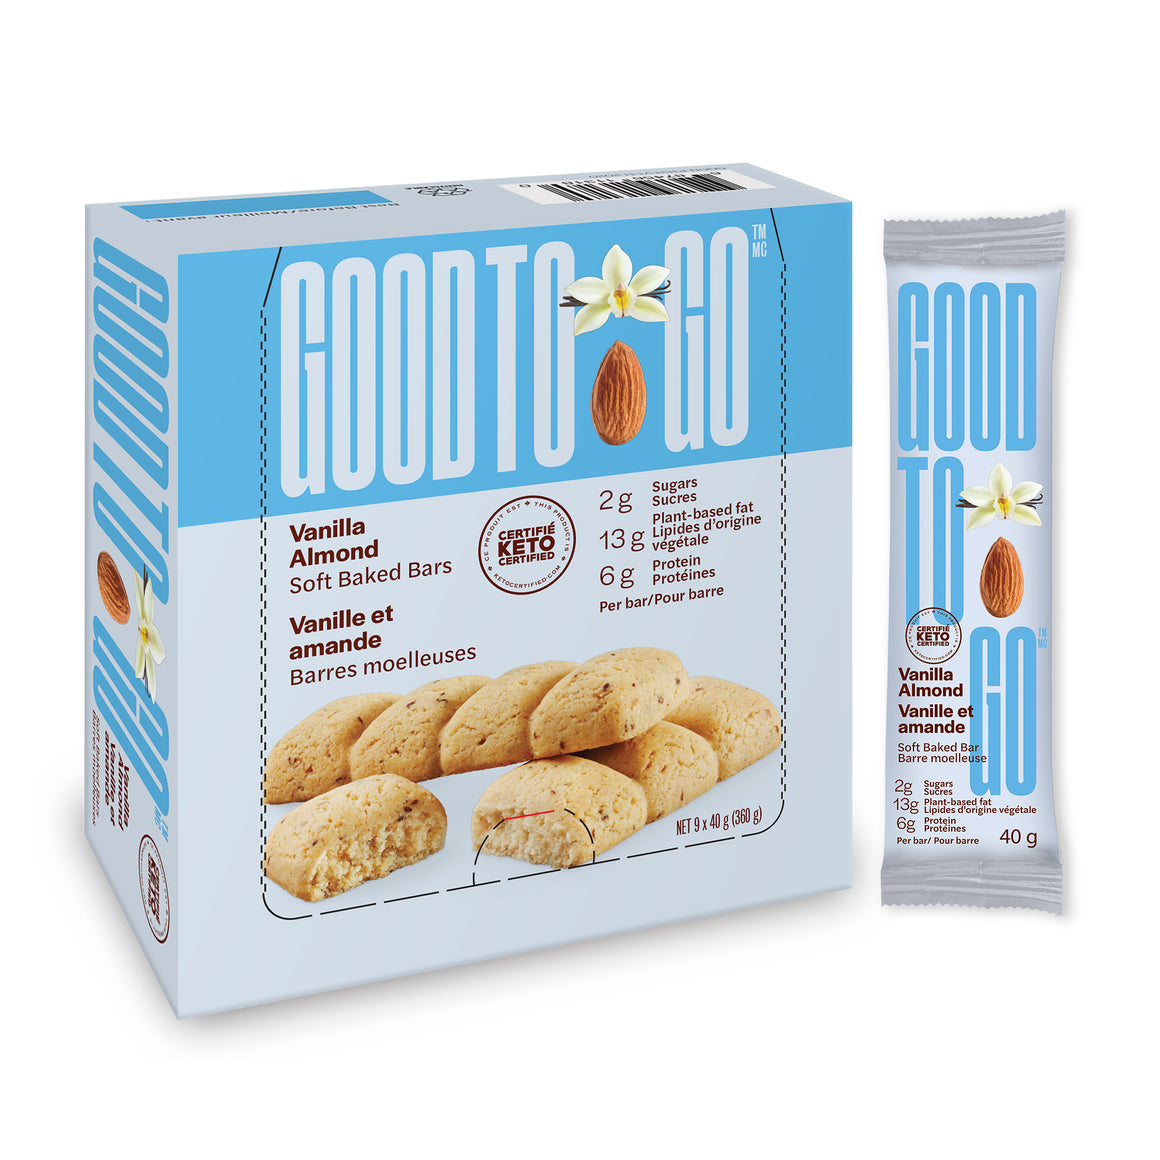 Vanilla Almond Snack Bar (9 Pack) - Keto